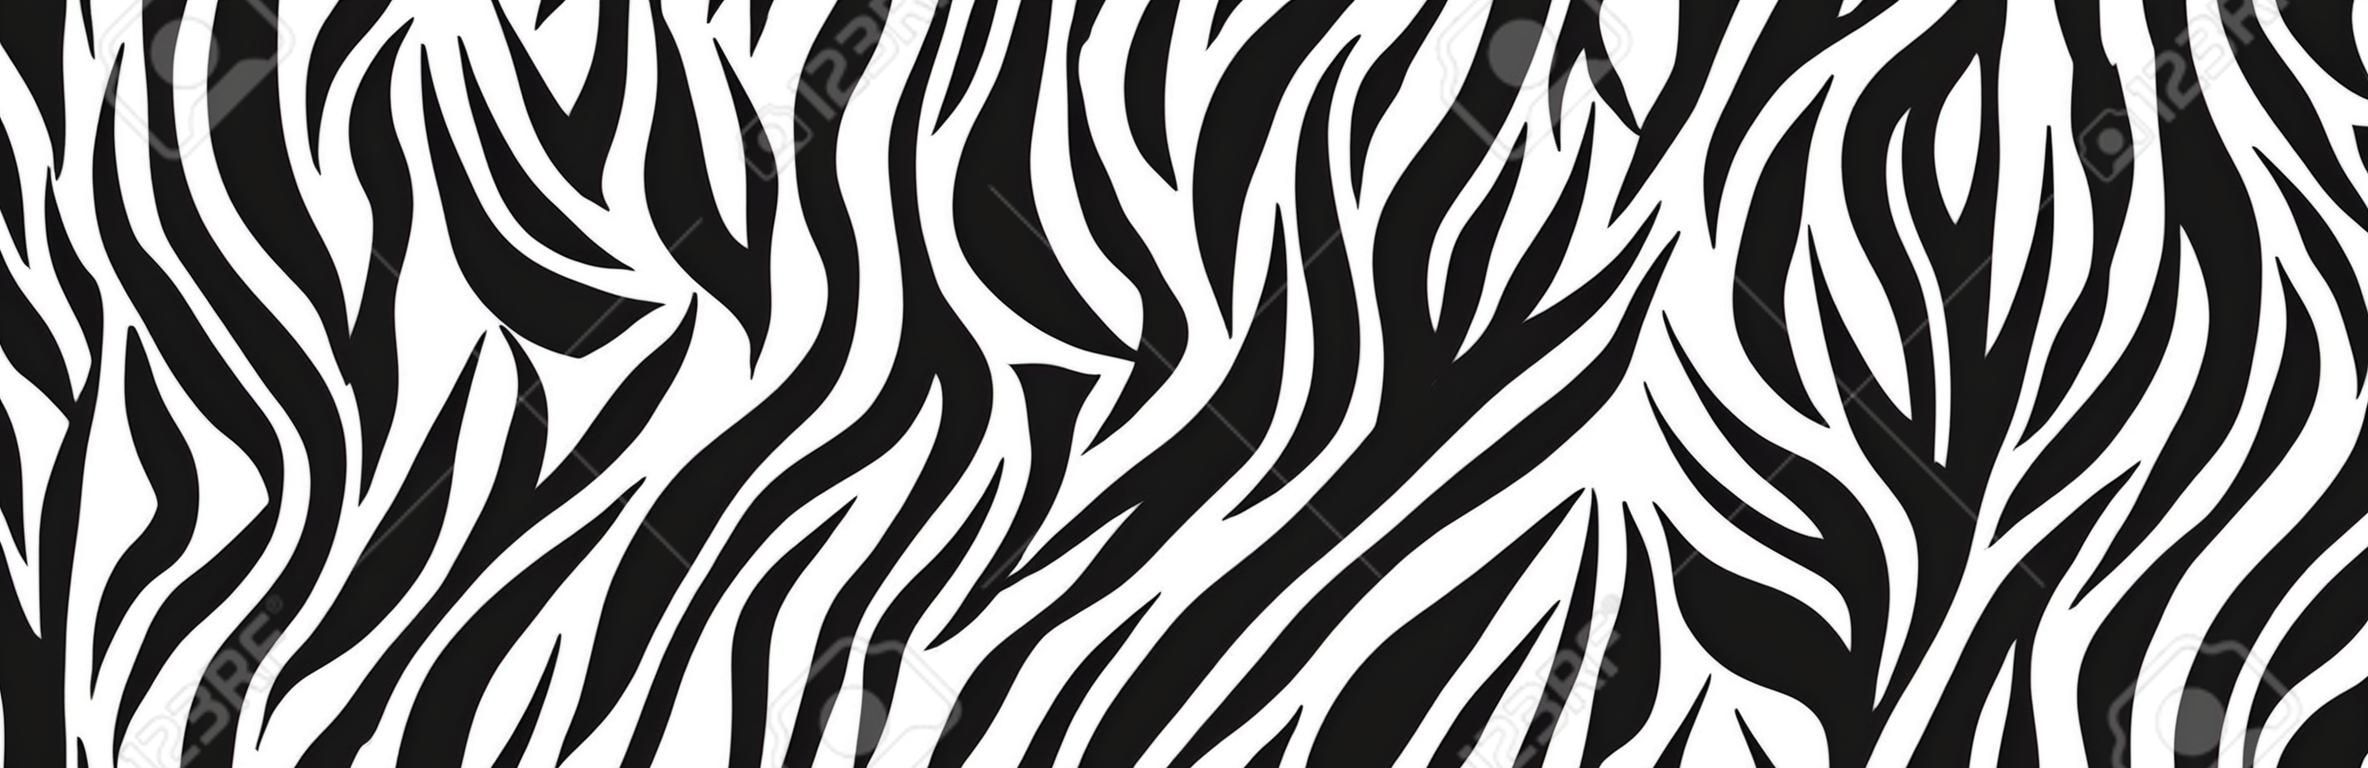 Motivo zebrato, elegante trama a strisce. Stampa naturale animale. Per la progettazione di carta da parati, tessuti, copertine. Fondo senza cuciture di vettore